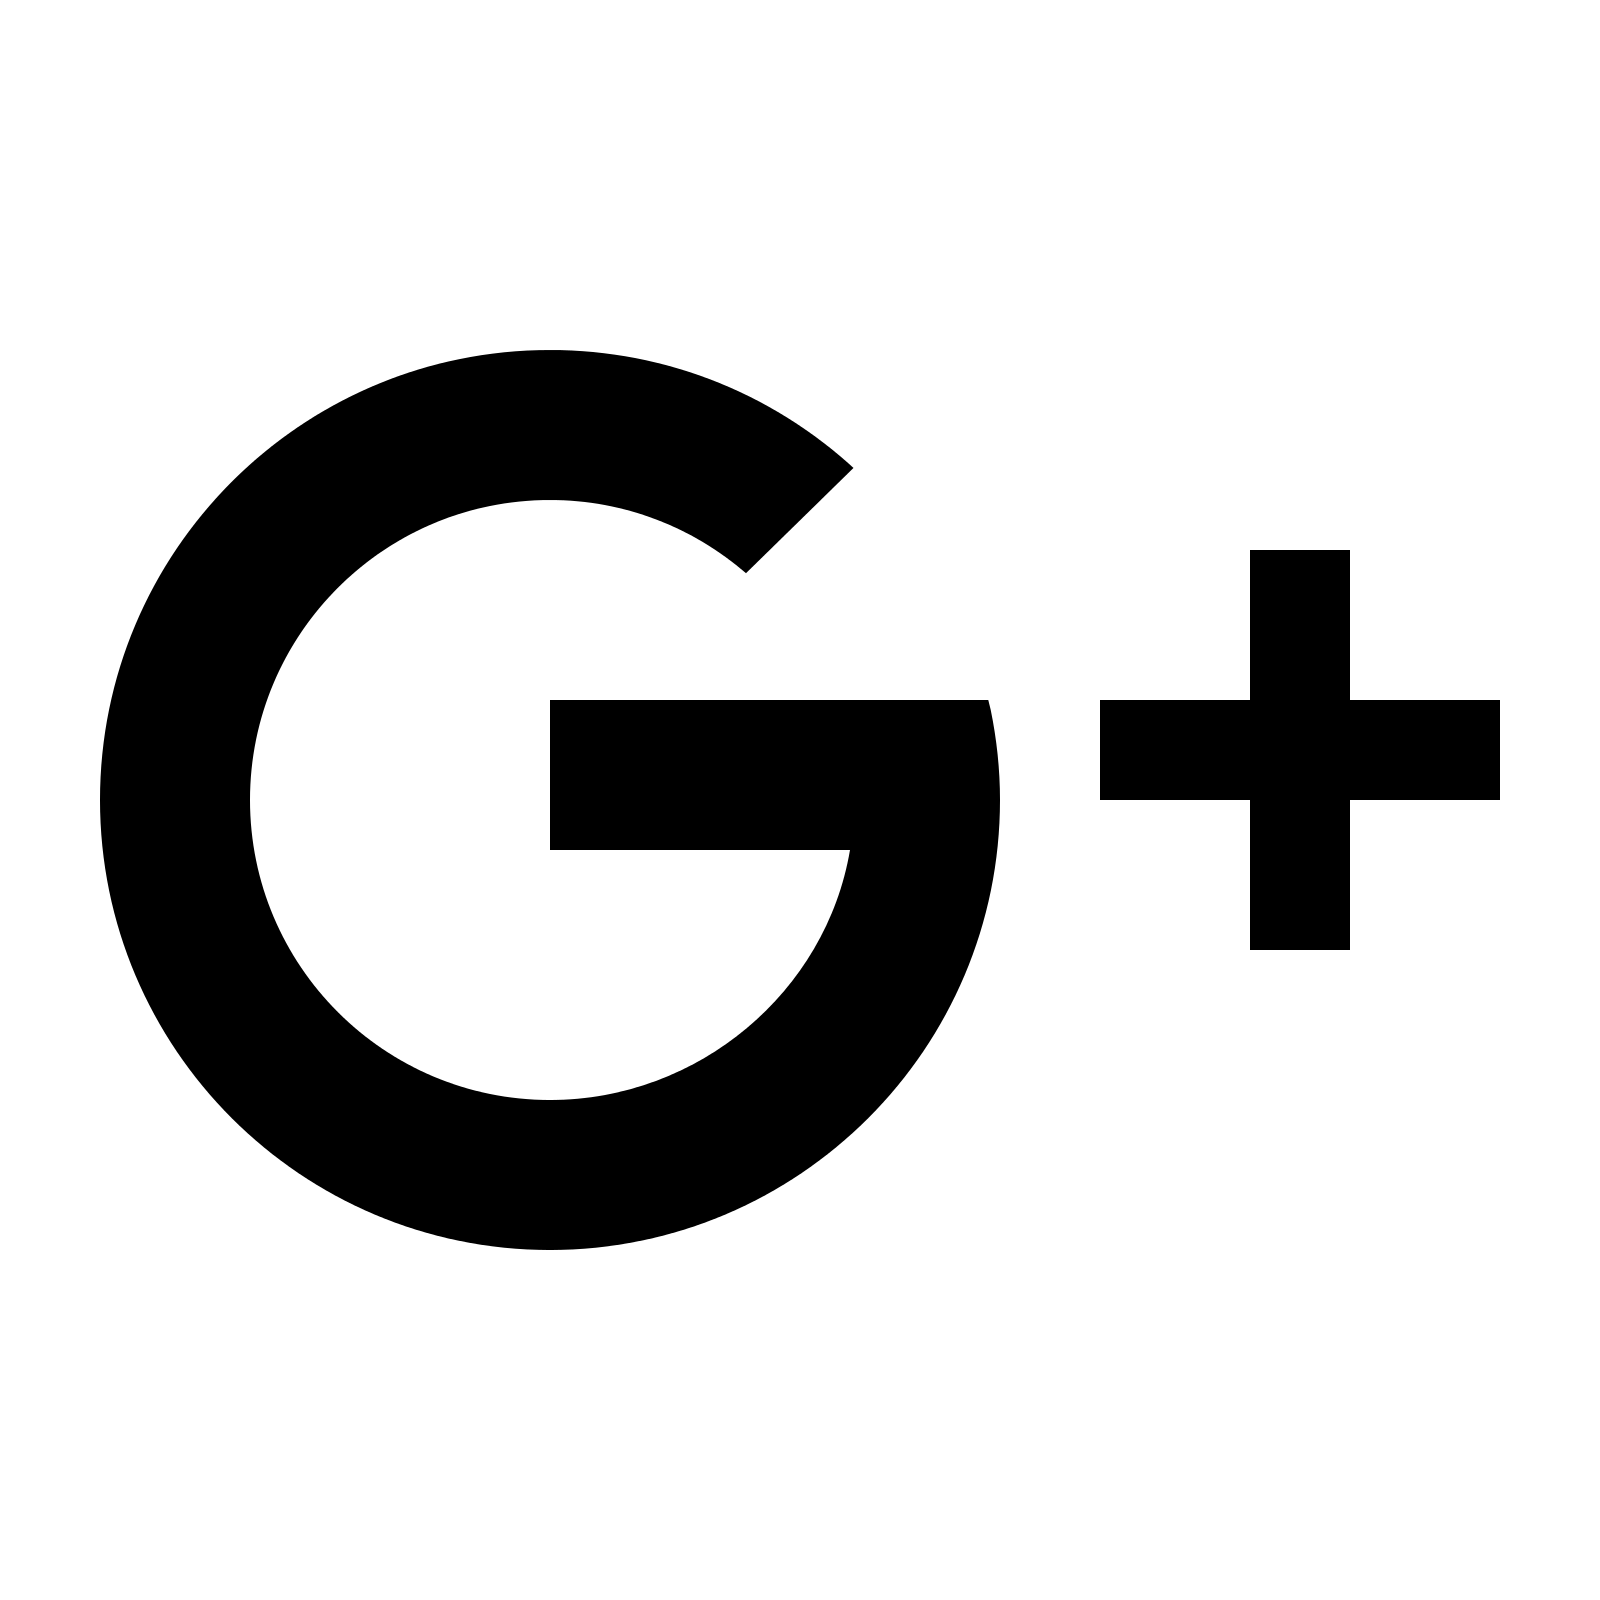 Find Us Google Plus Logo - Google Plus Logo Png Transparent Background image